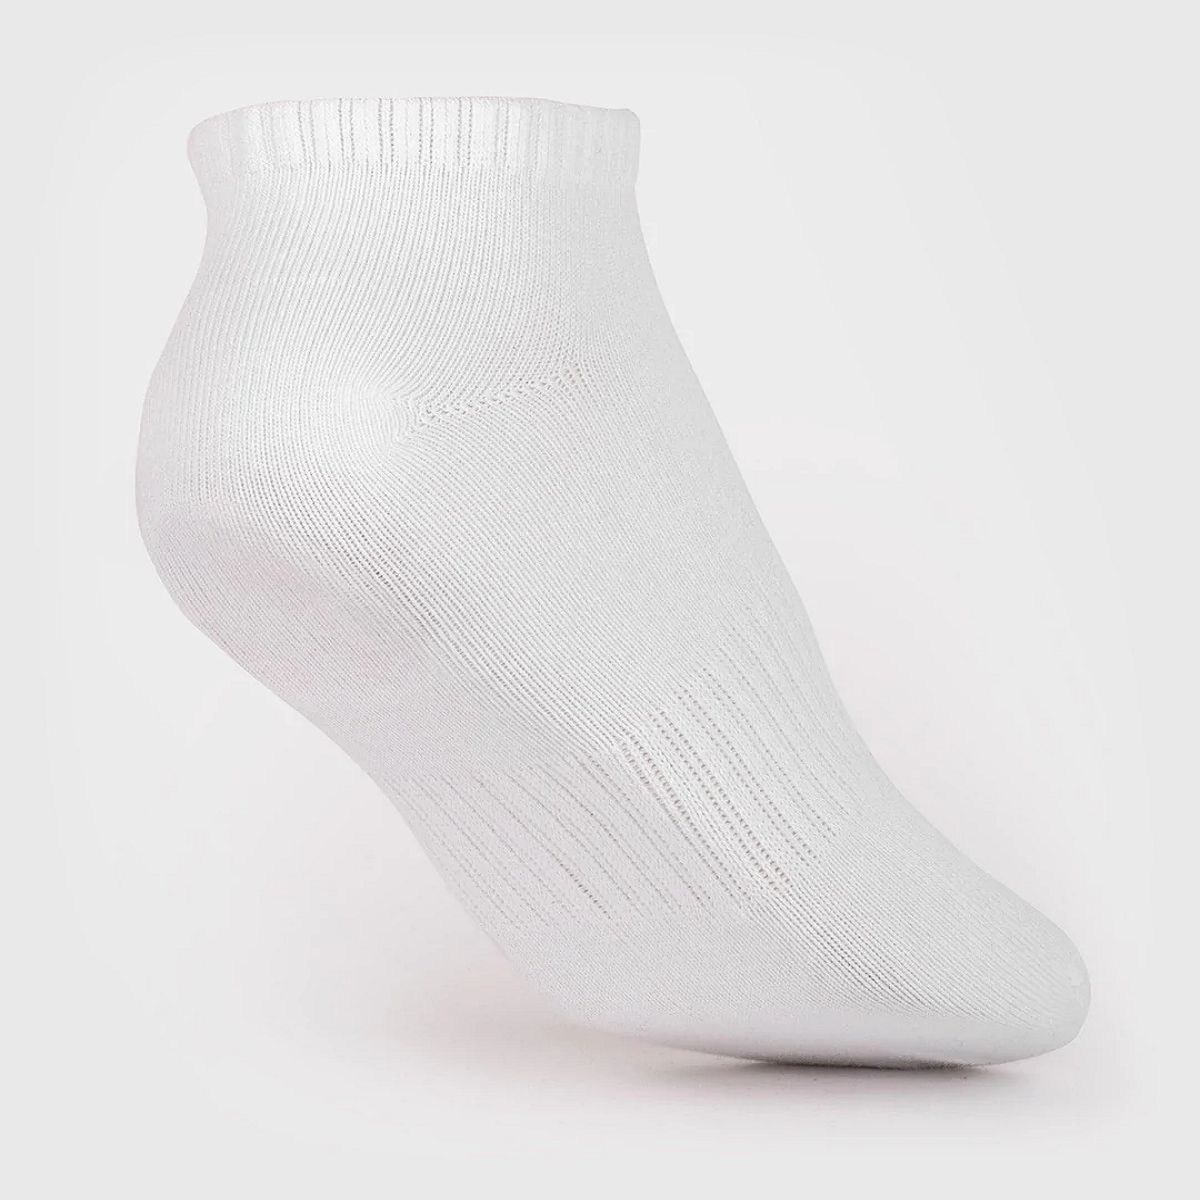 Venum Classic Footlet Socks 3-Pack - White/Black Venum